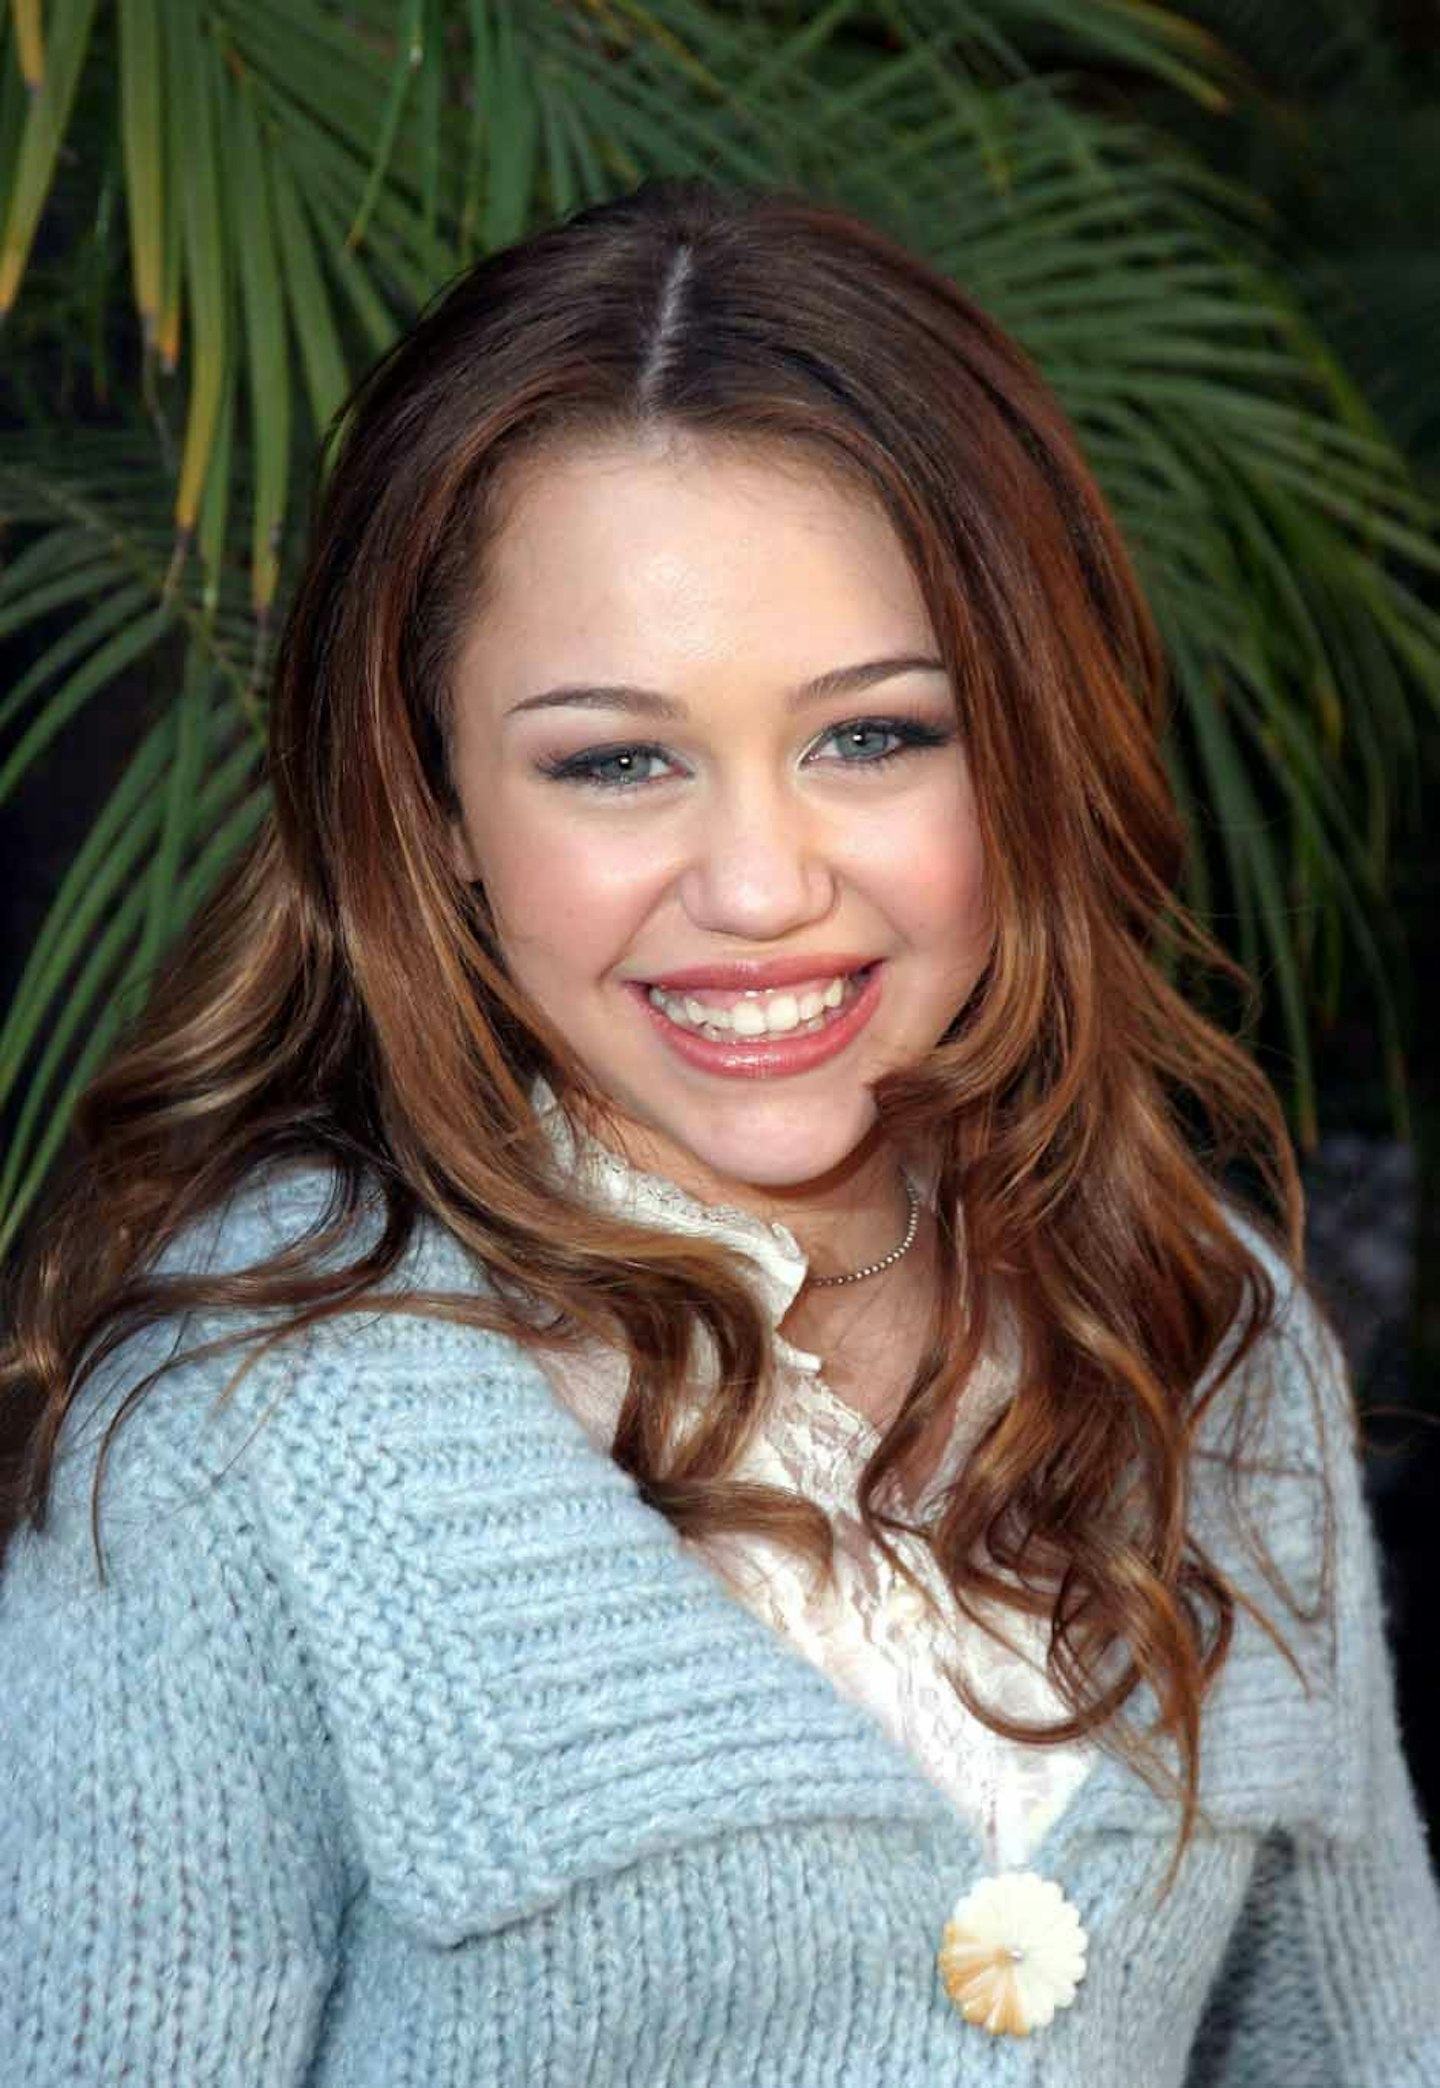 Miley attends a 'Hannah Montana' photocall (2006)